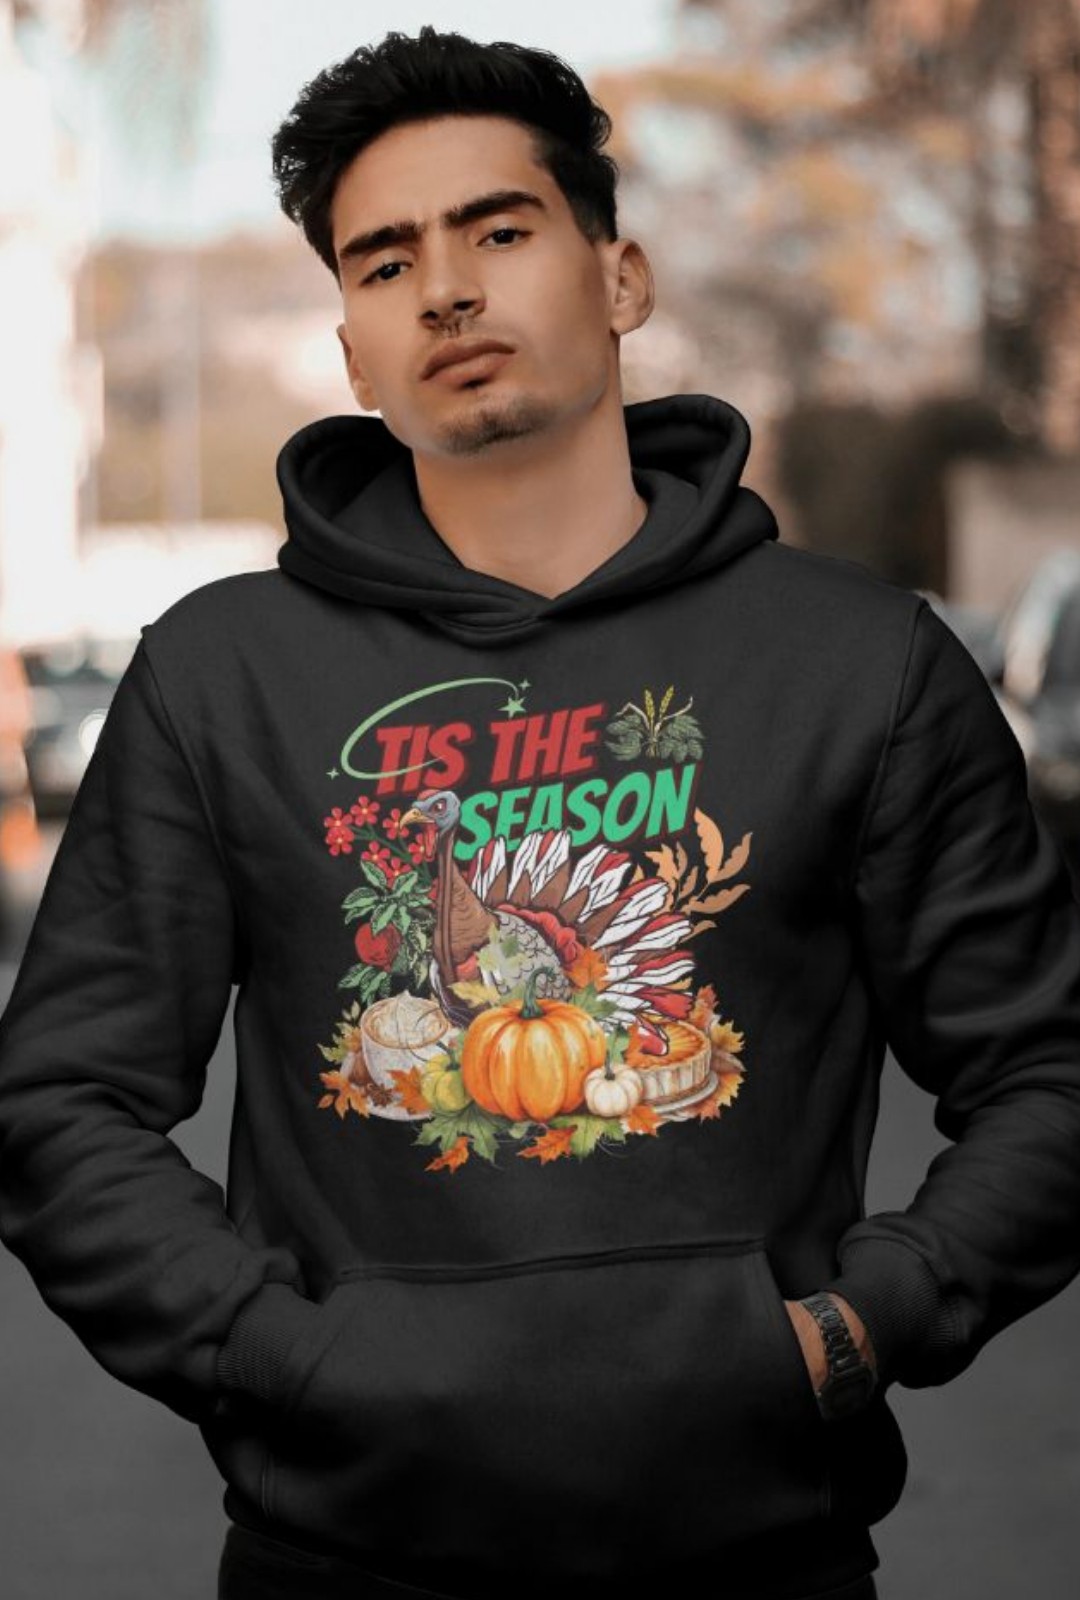 tis the season Thanksgiving hoodie